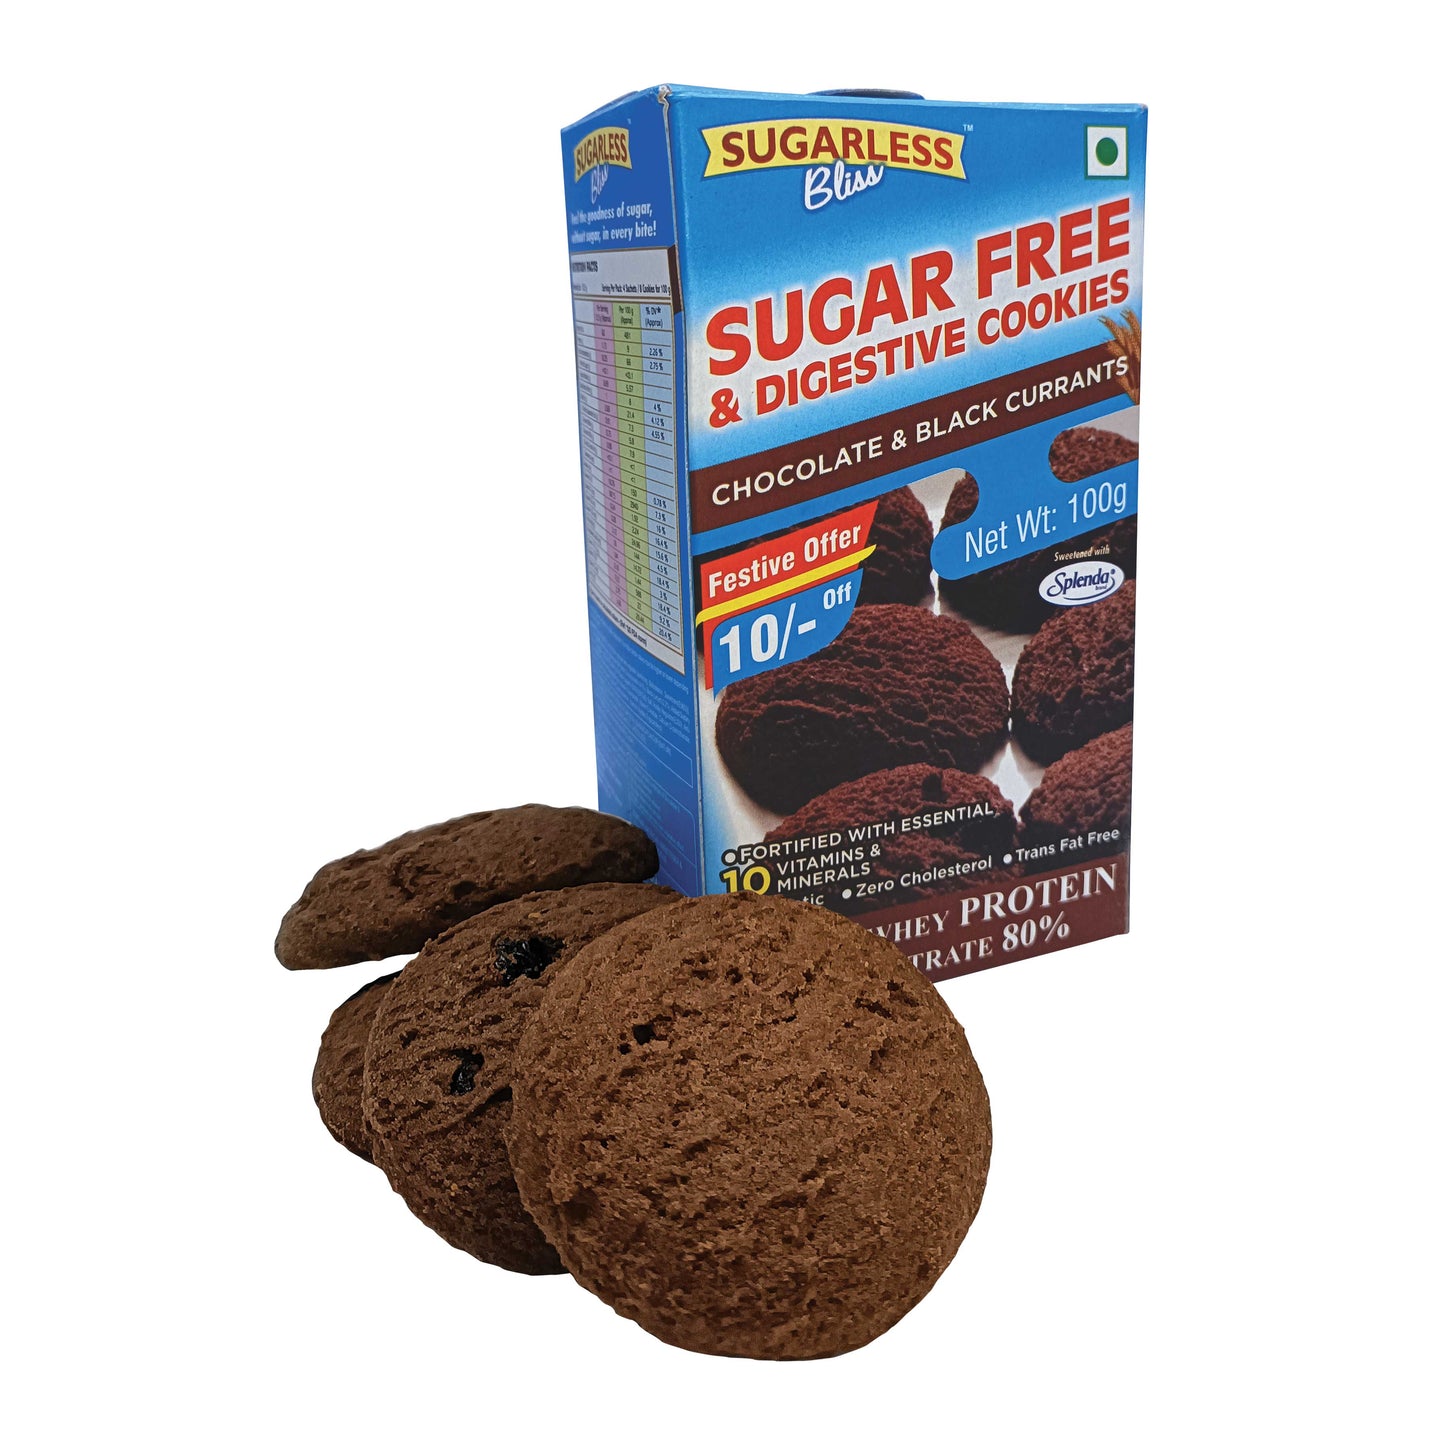 Sugar Free & Digestive Cookies - Chocolate & Black Currant (100gms)